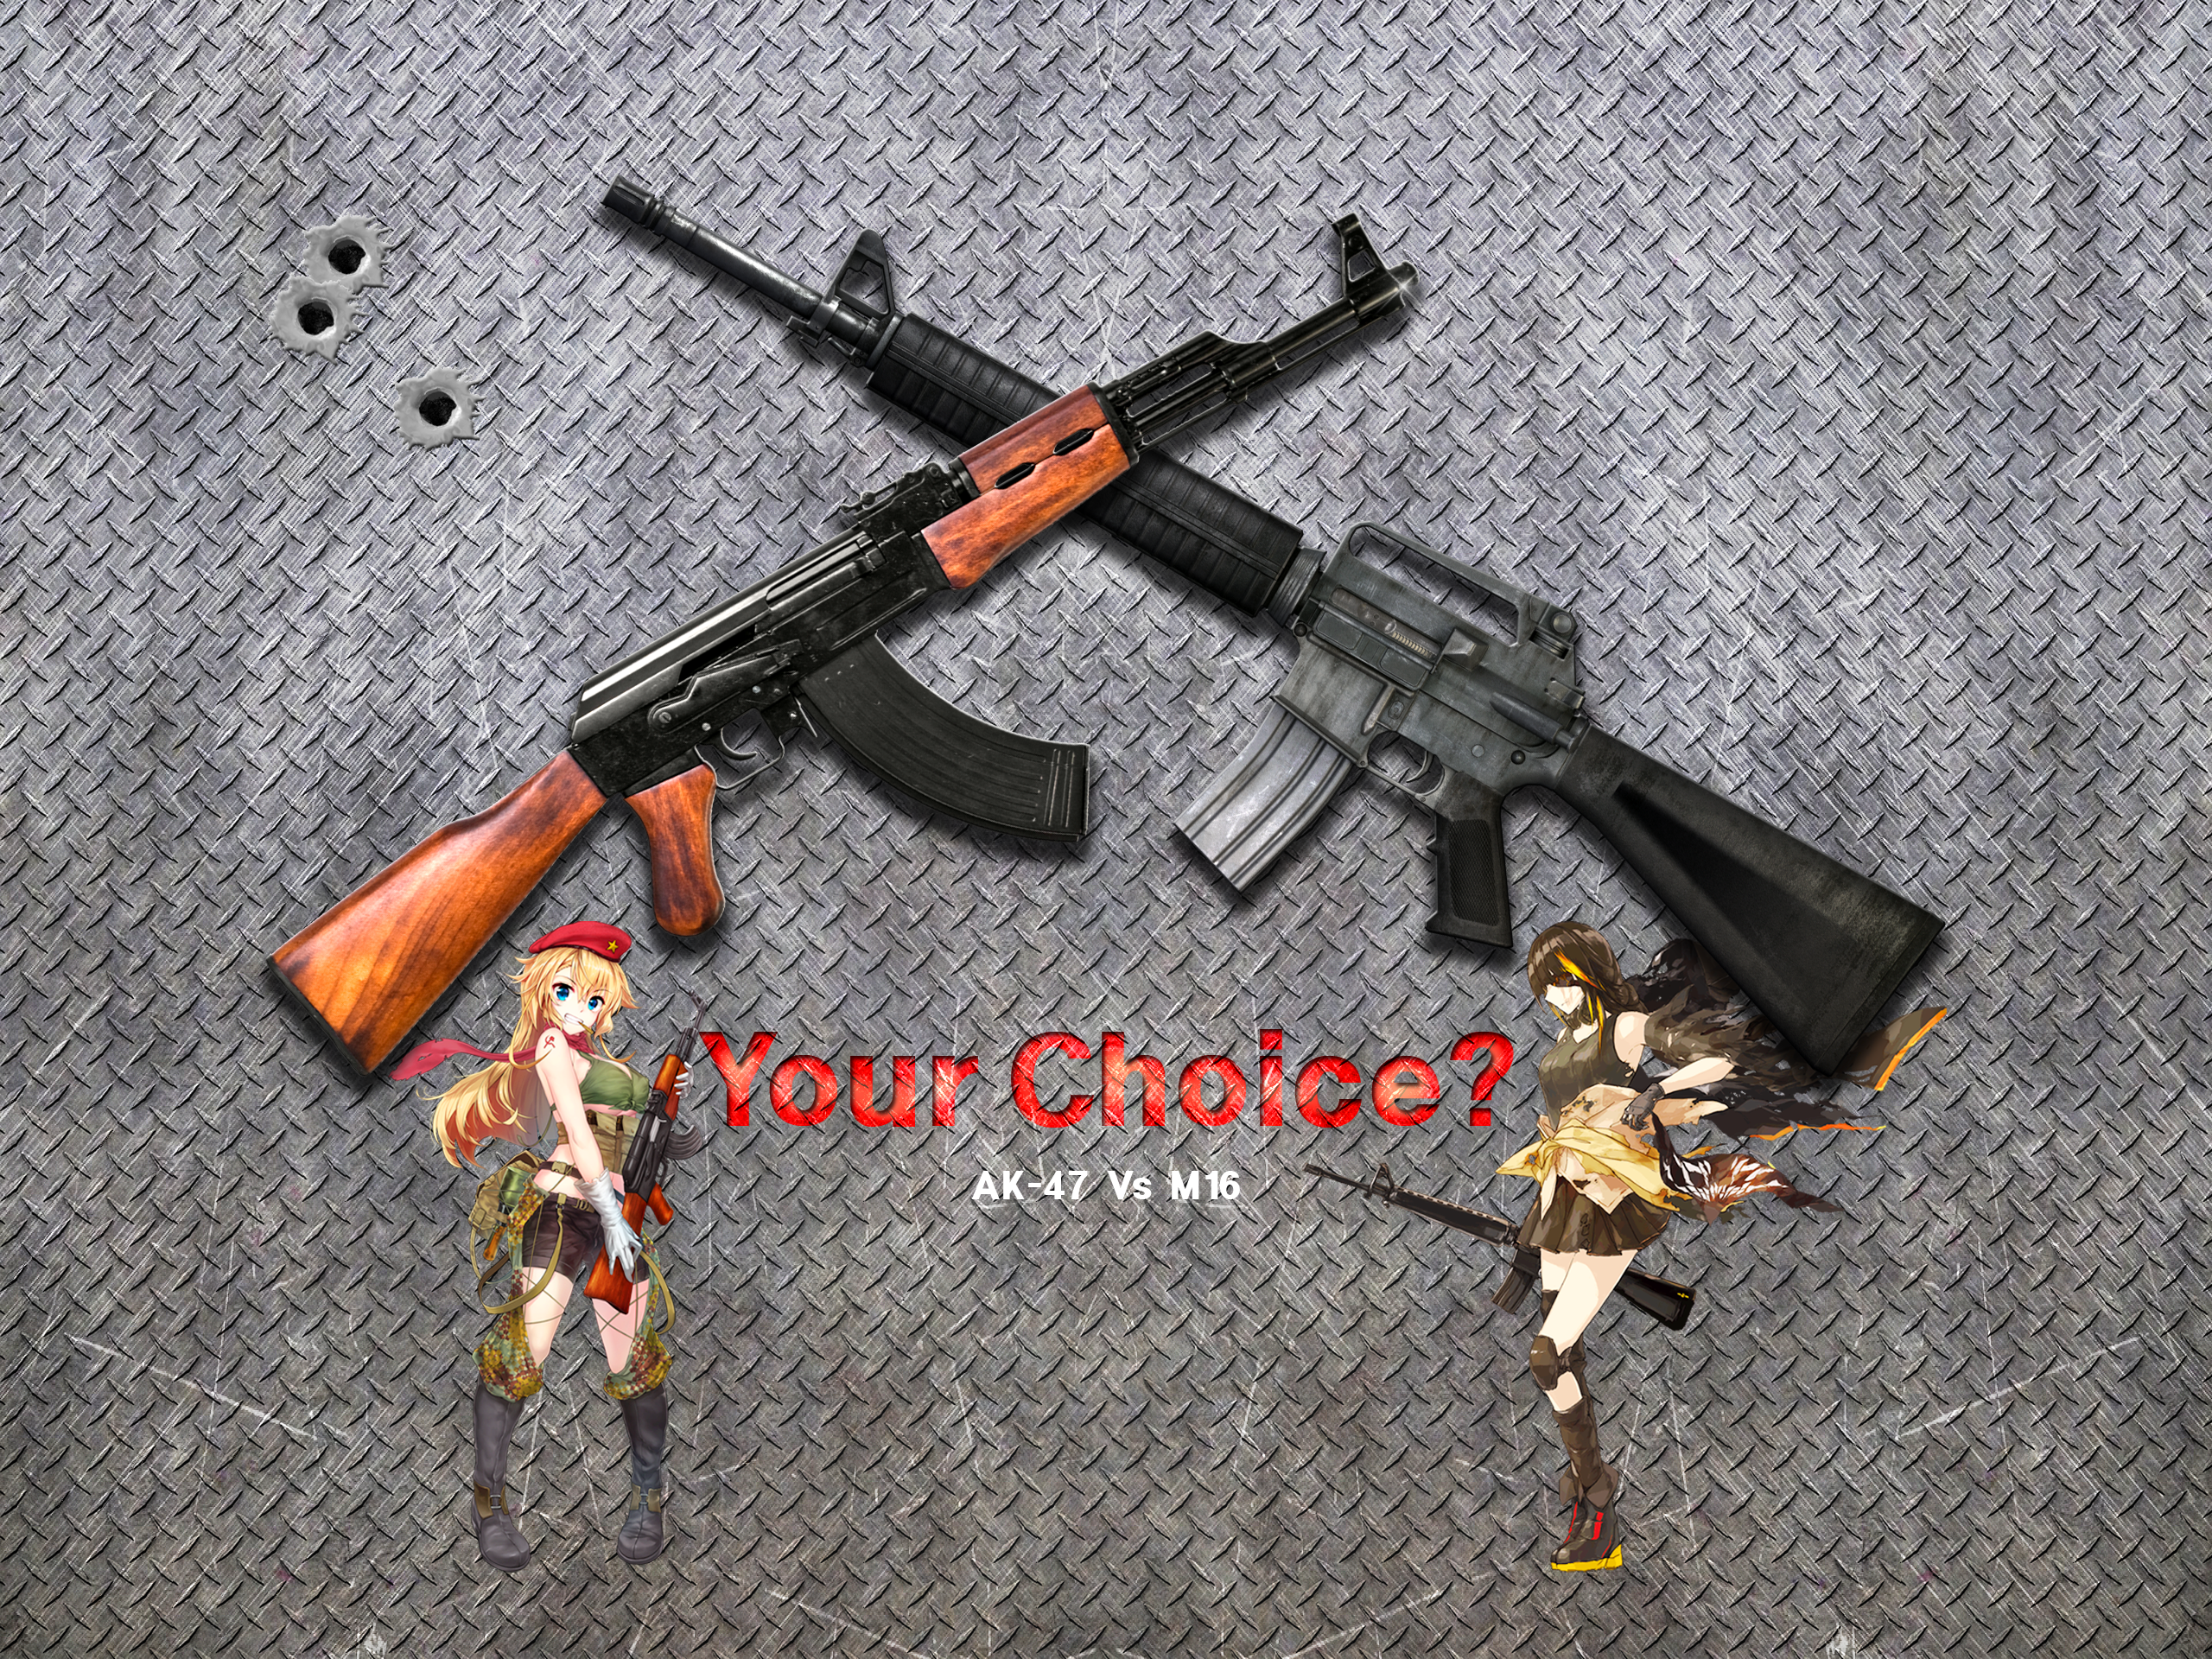 Anime 2560x1920 ripples AK-47 M16 weapon anime girls Girls Frontline